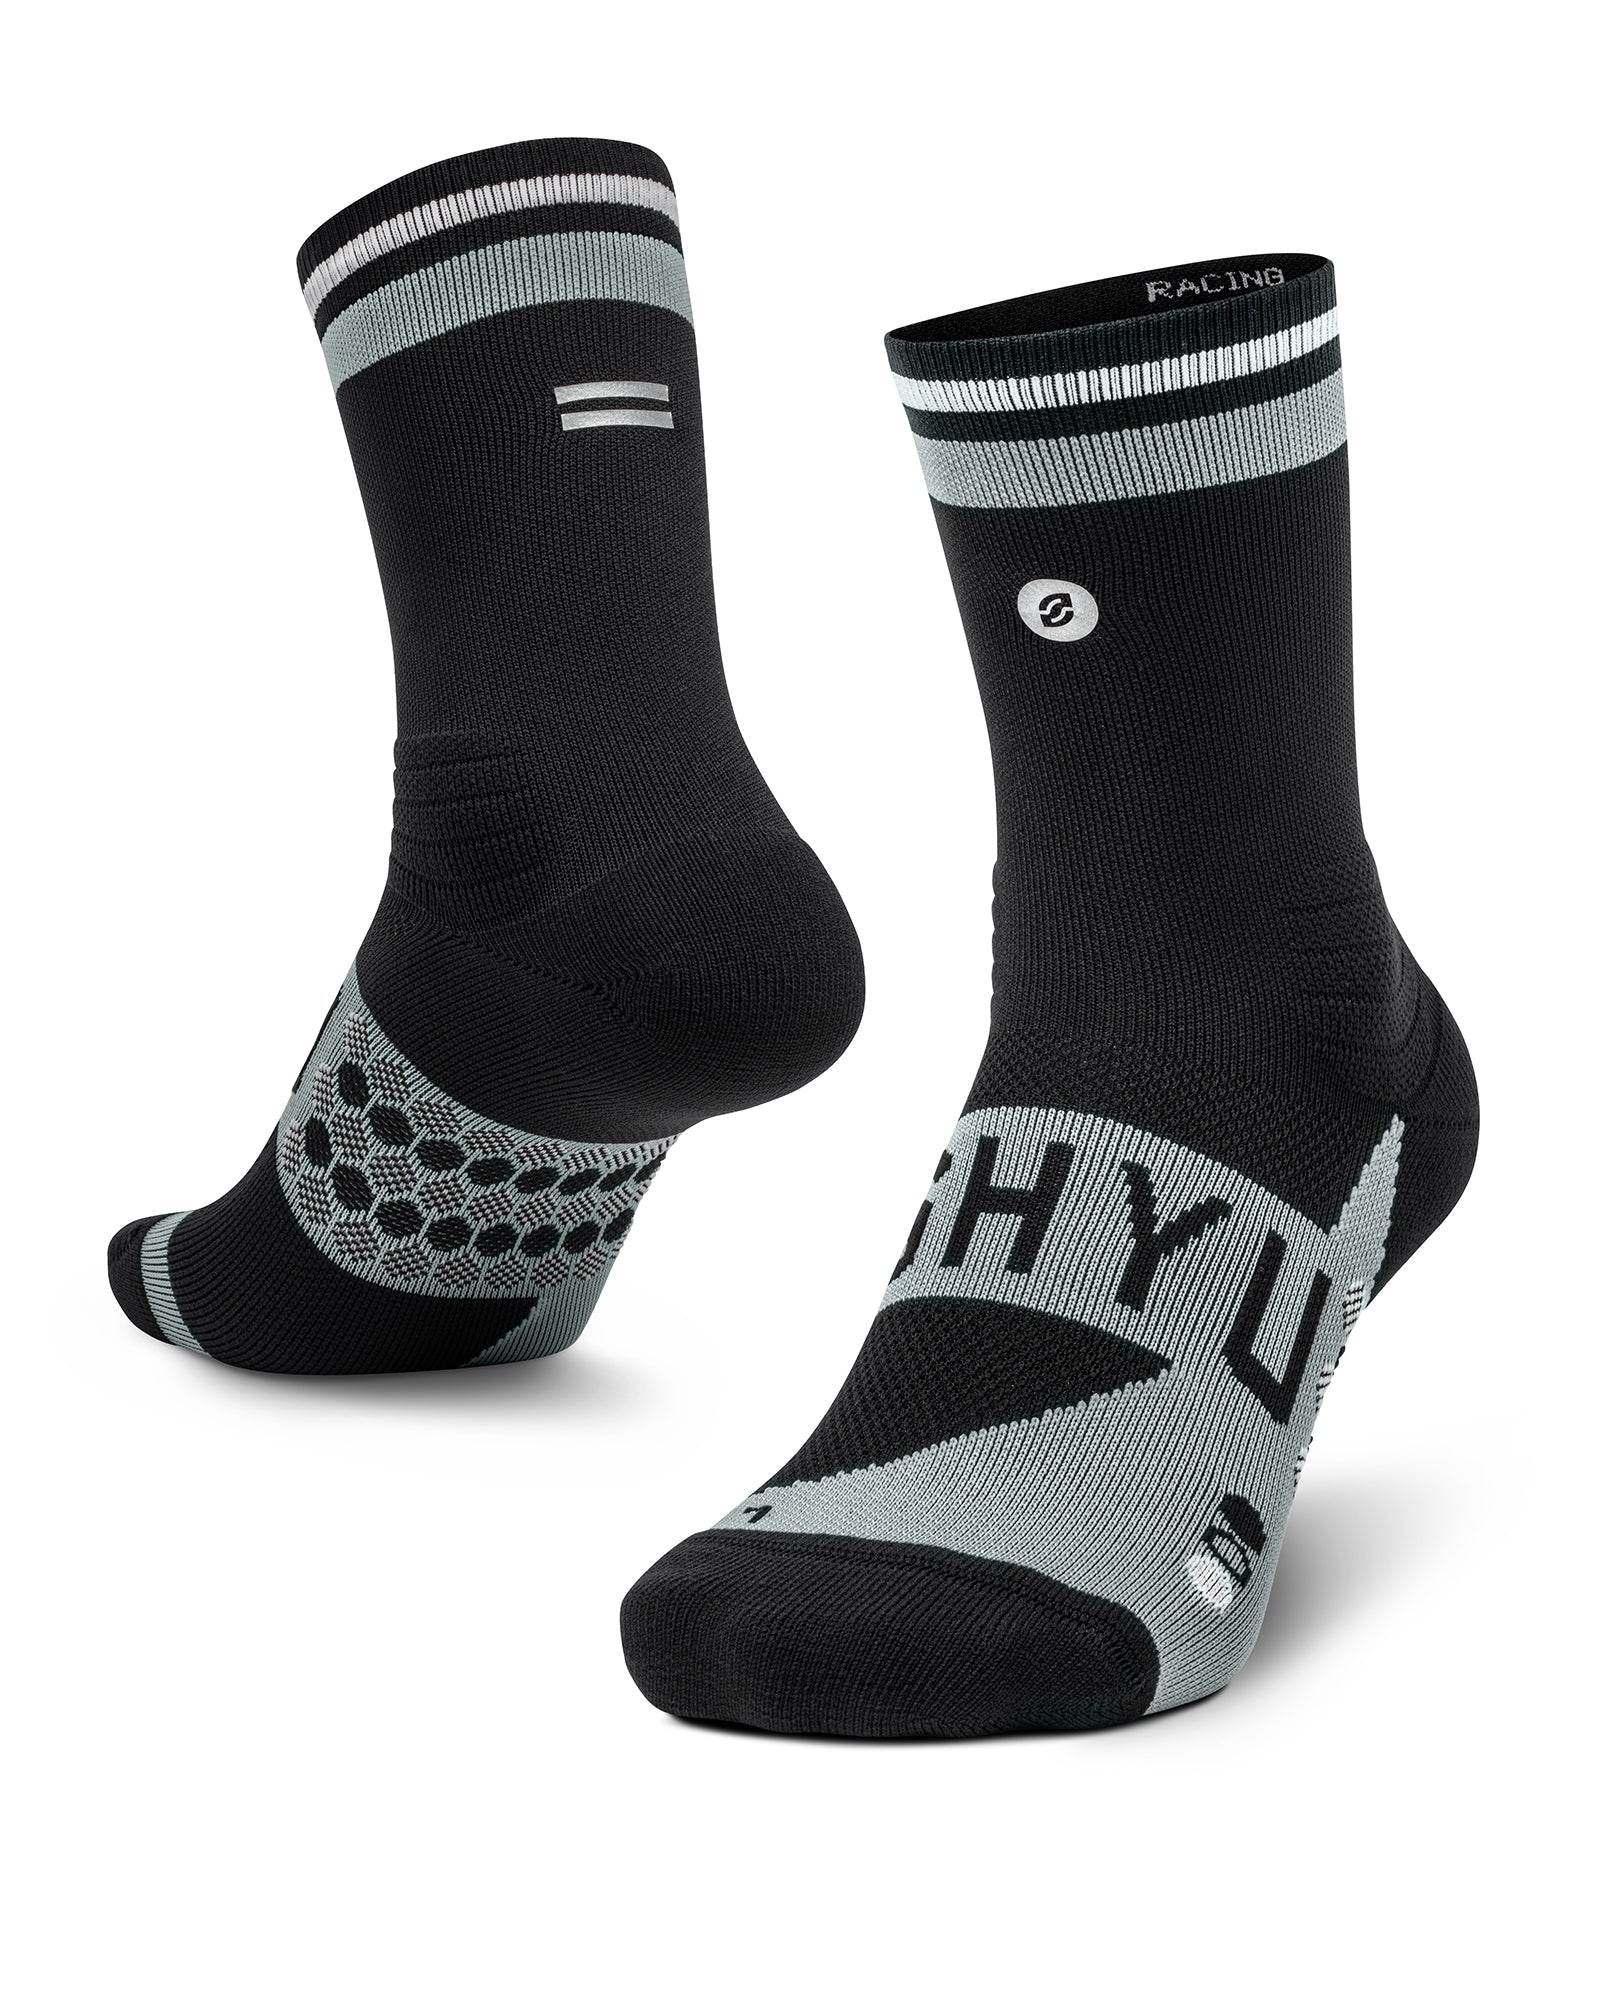 SHYU racing socks - black | grey | white